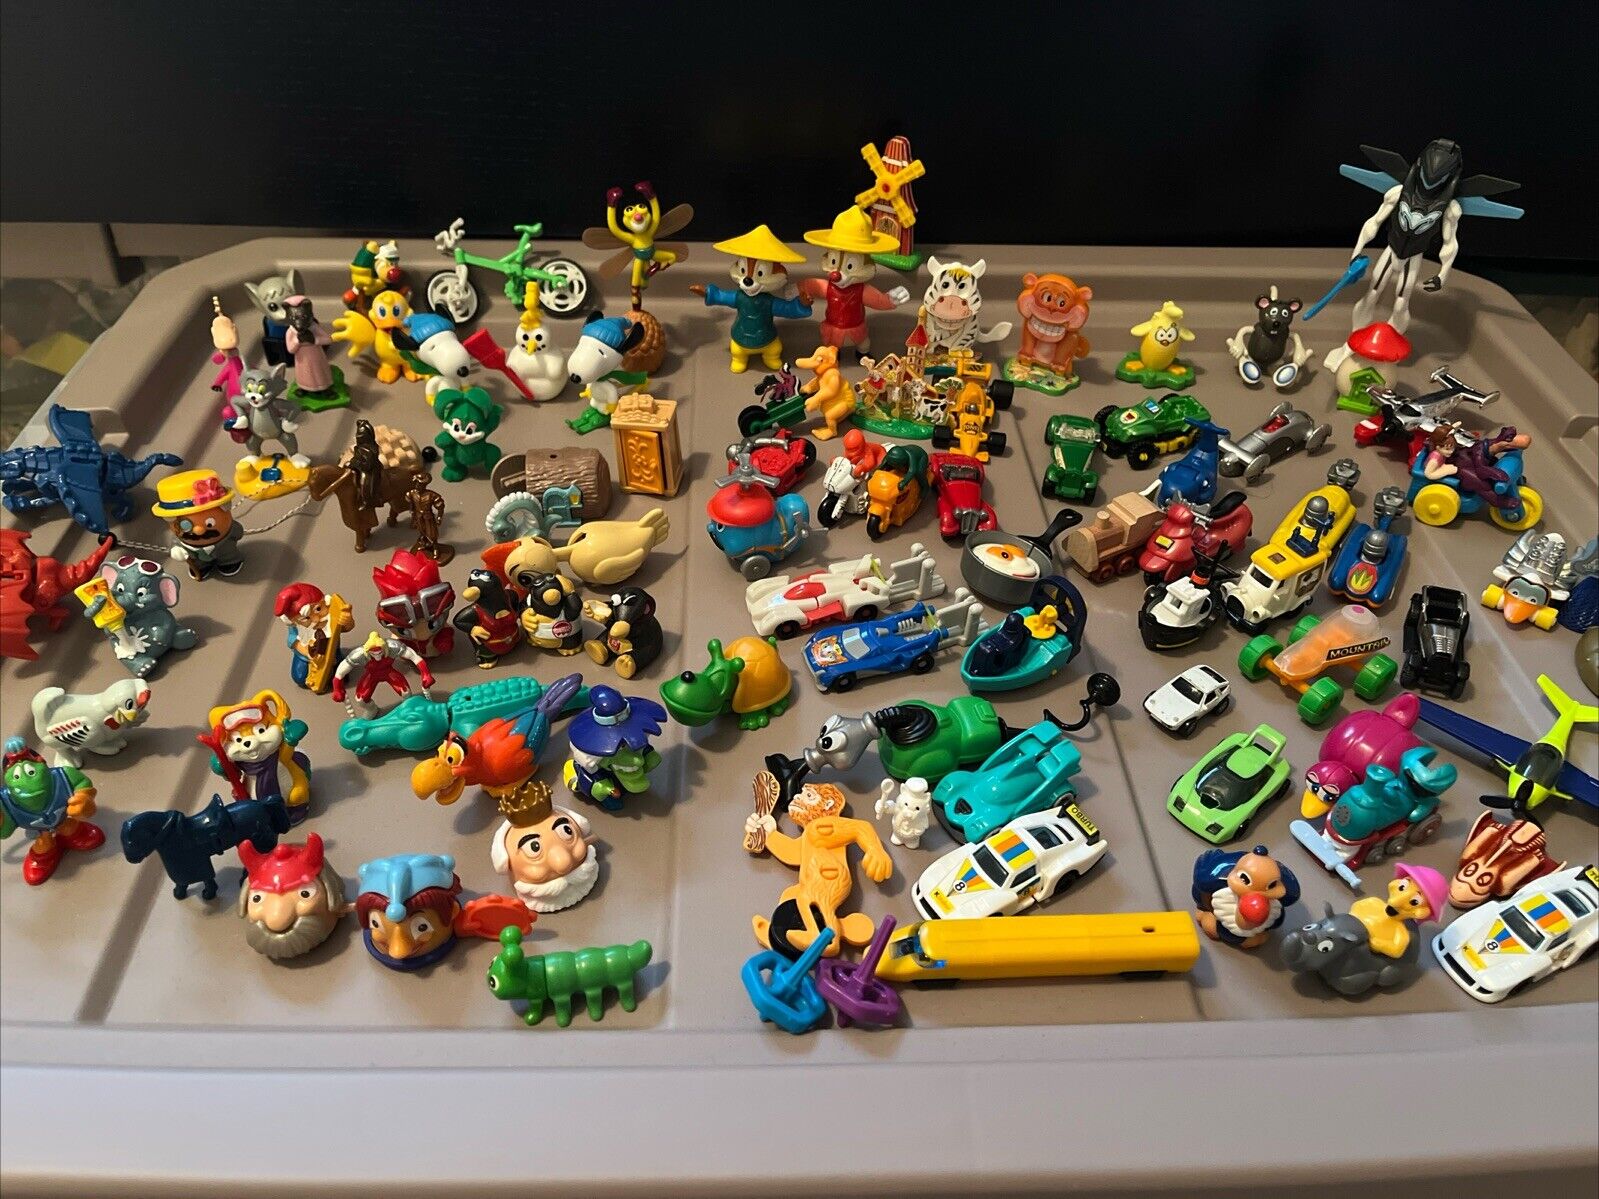 Kinder Surprise Toys Lot of 90+Vintage Nostalgic 80’s, 90s Early 2000s.